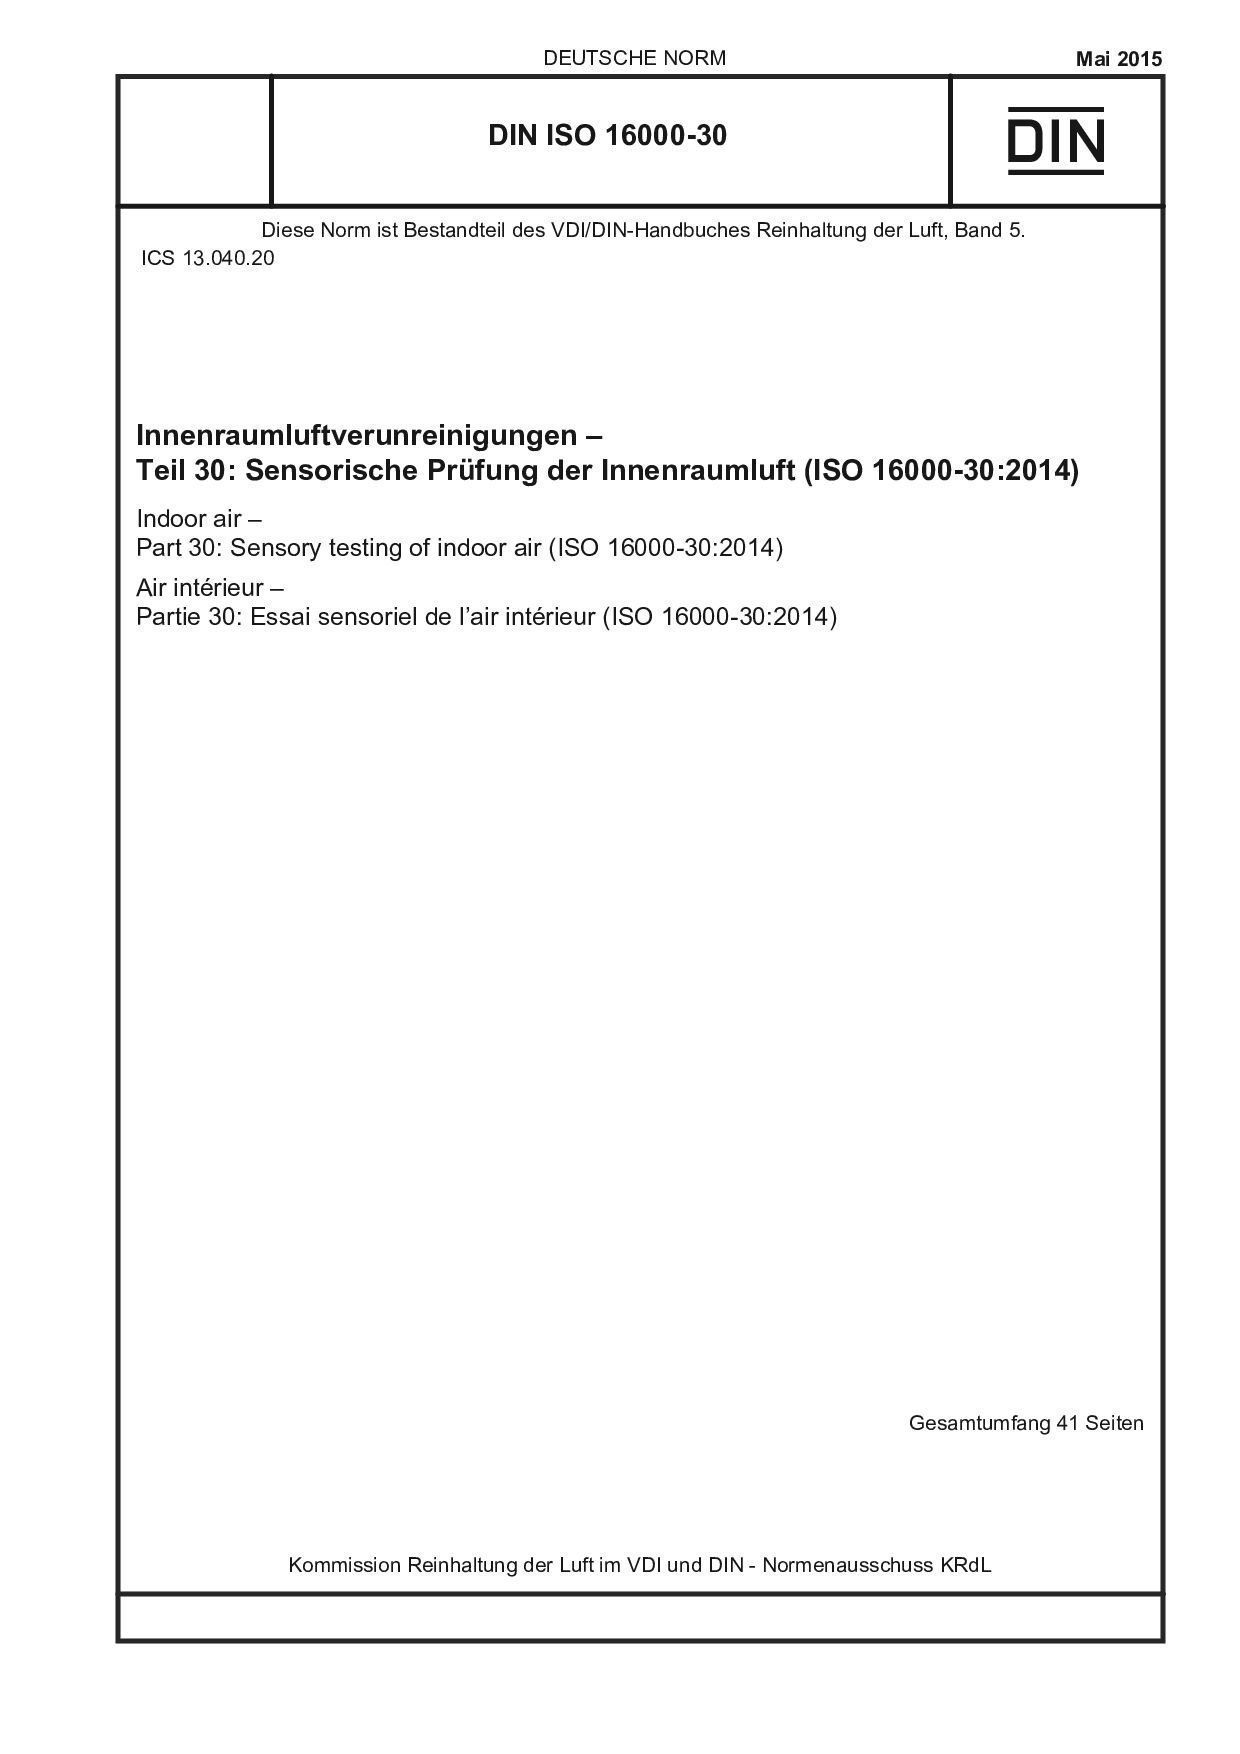 DIN ISO 16000-30:2015